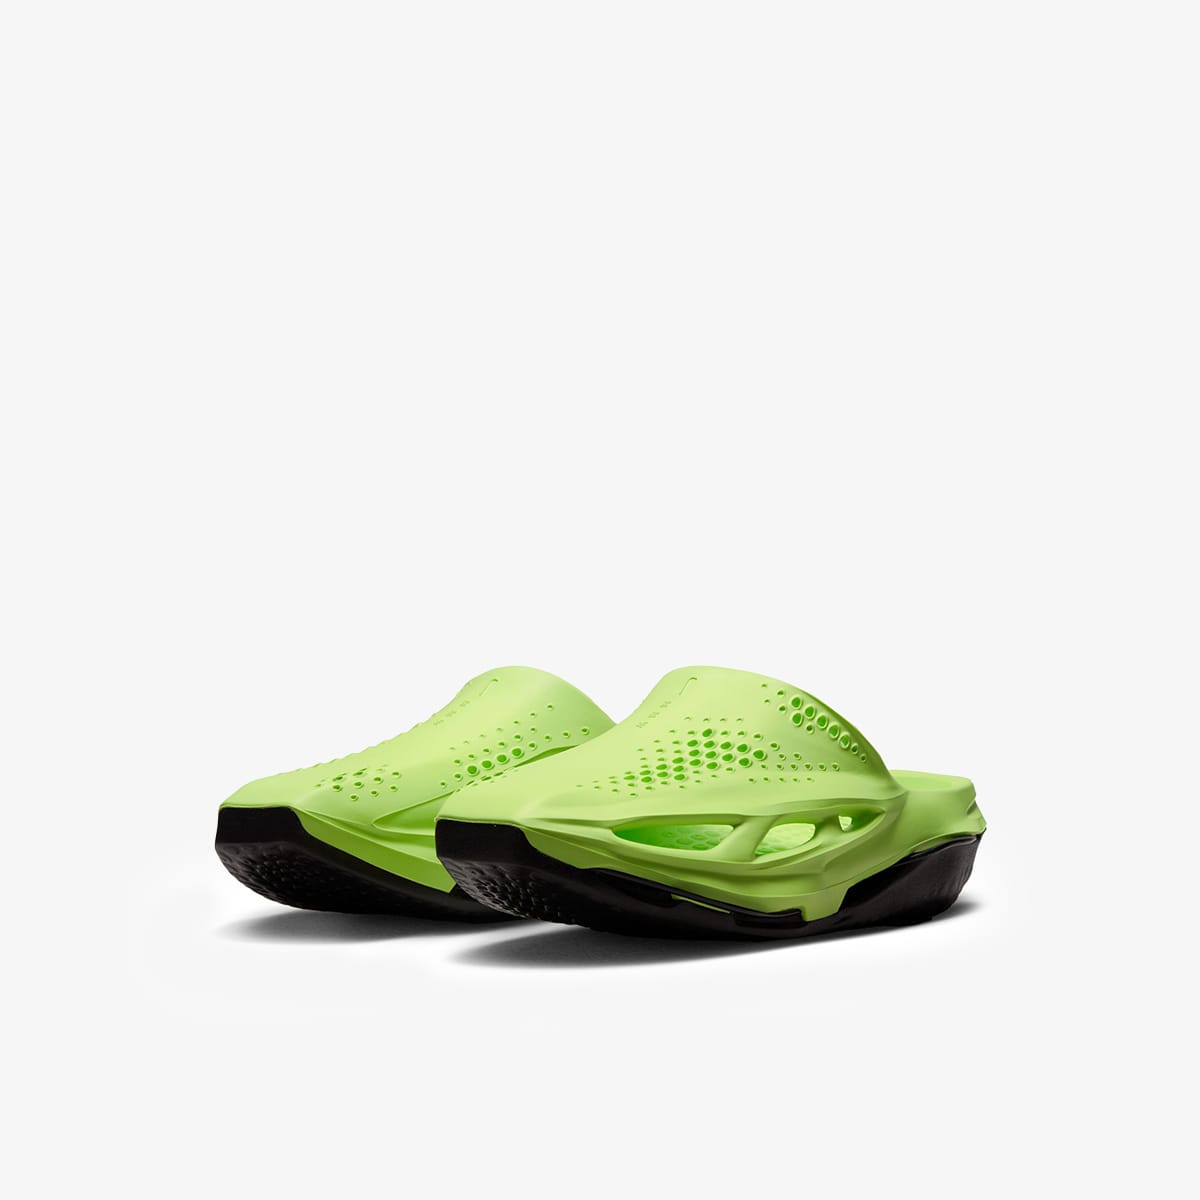 Nike x MMW 5 Slide (Volt & Black) | END. Launches